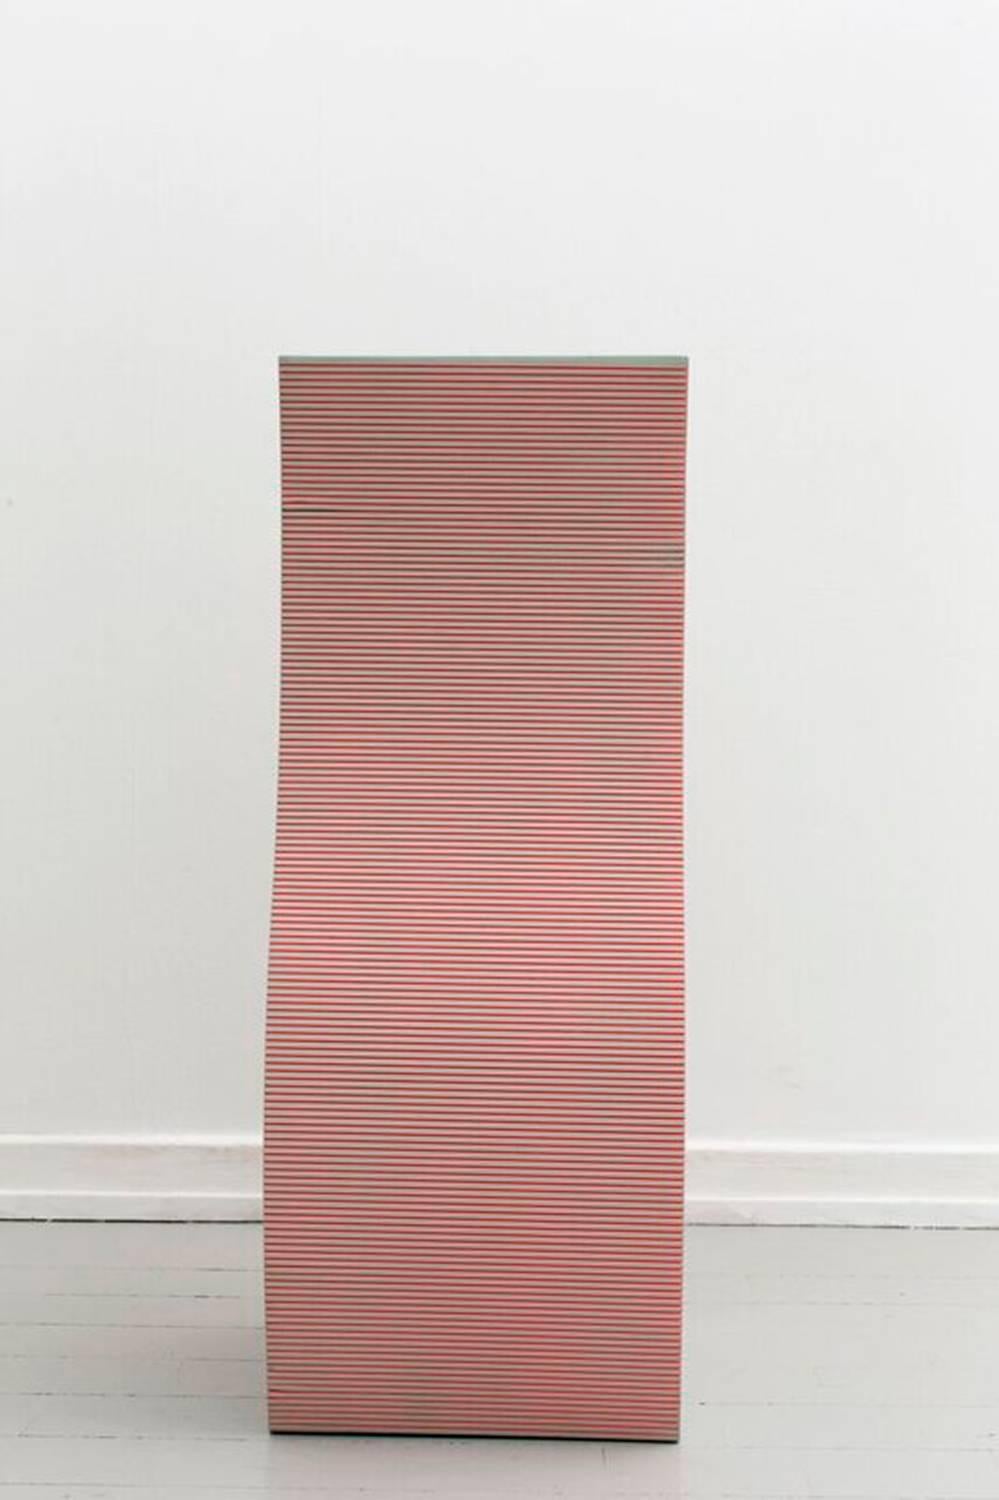 Danois Plinthe « Opdium » de Fredrik Paulsen en vente